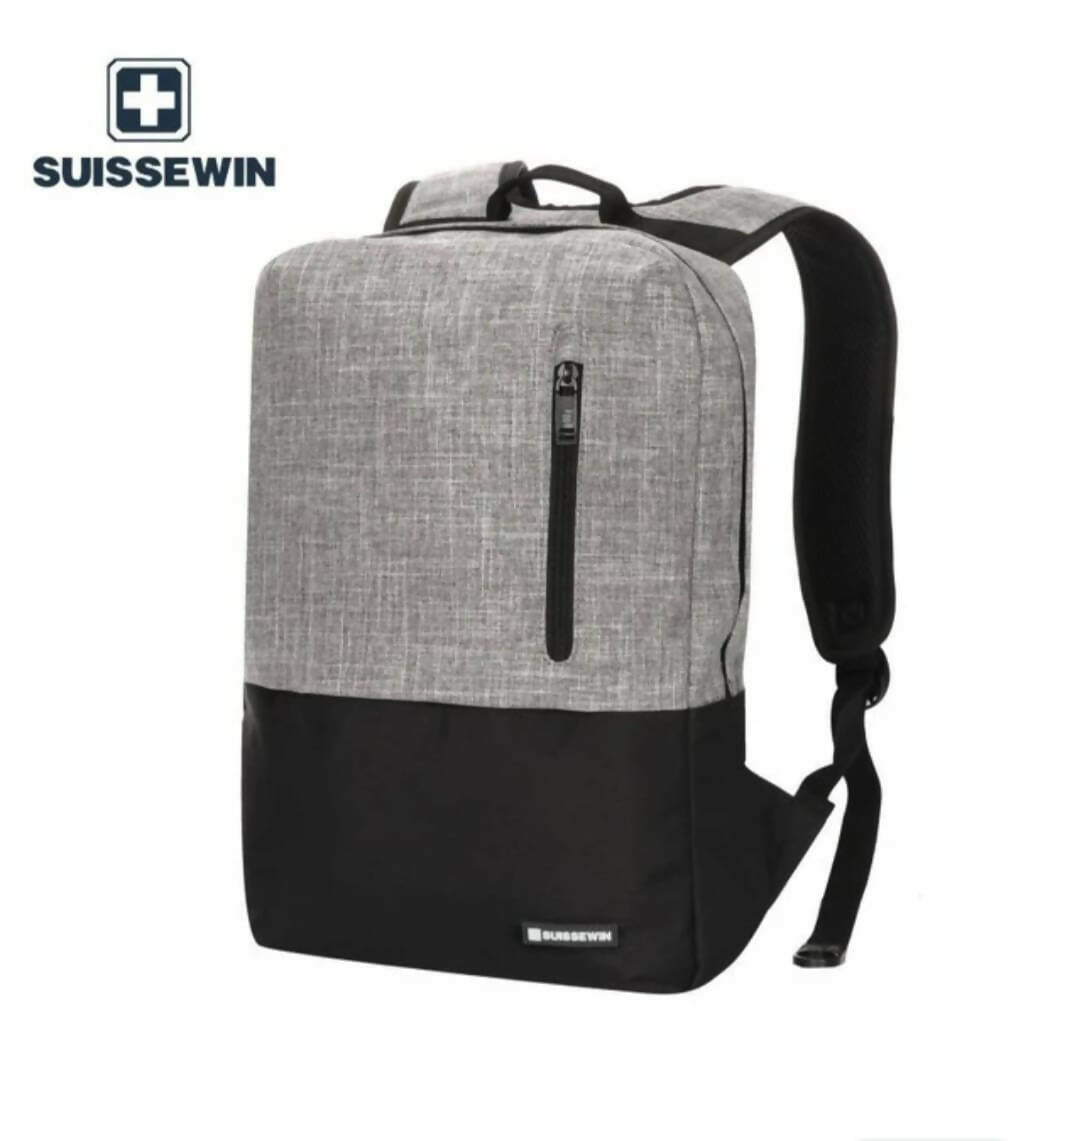 Durable high quality bagpack